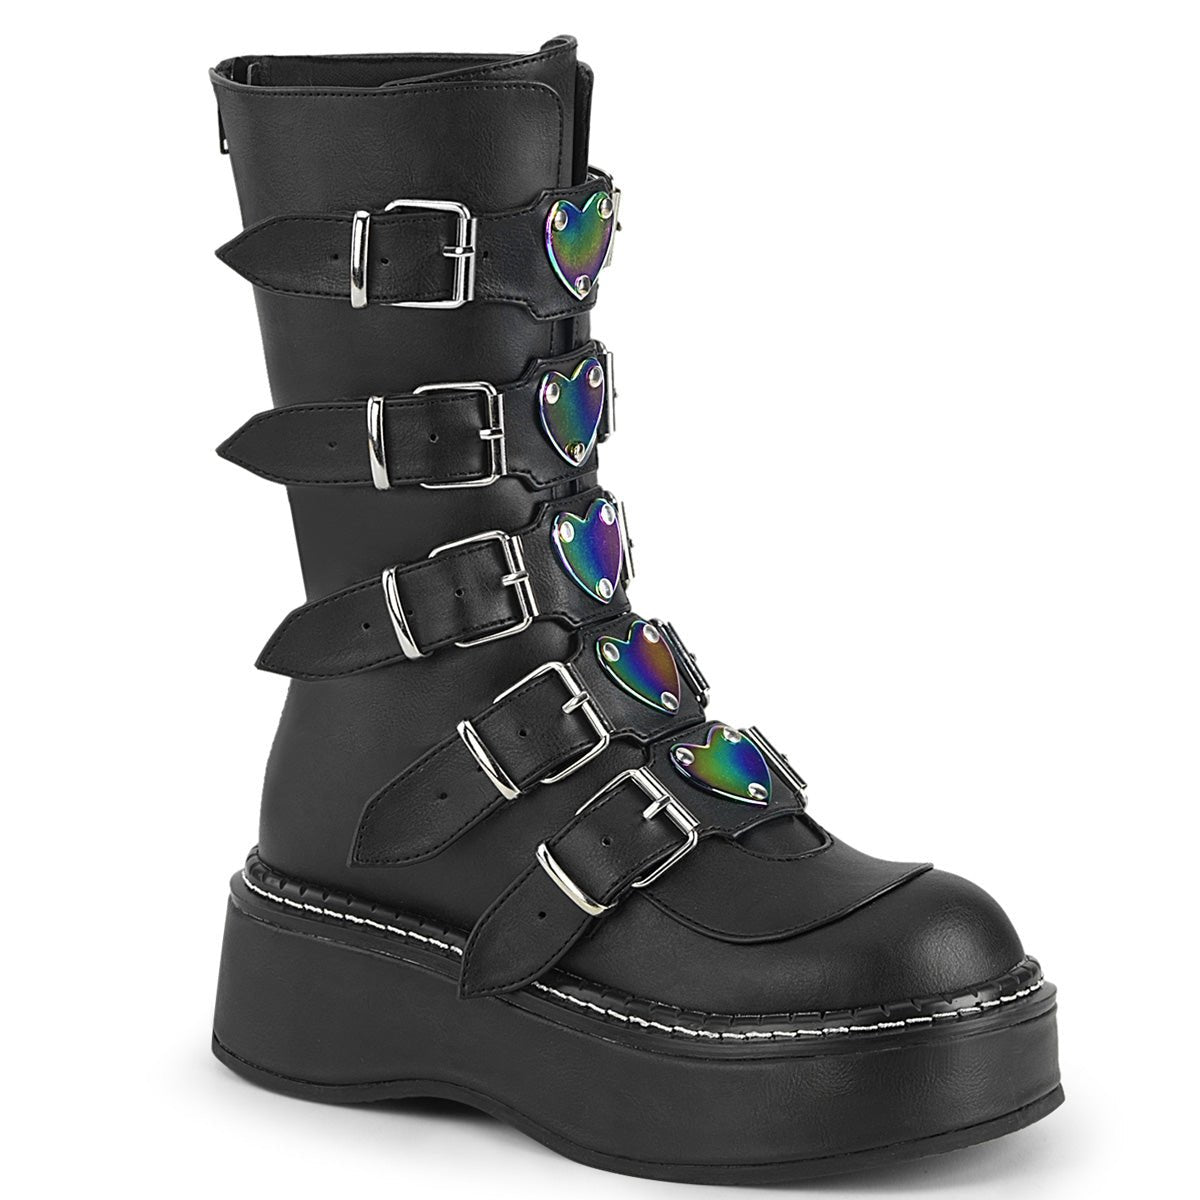 Too Fast | Demonia Emily 330 | Black Vegan Leather Women's Mid Calf Boots